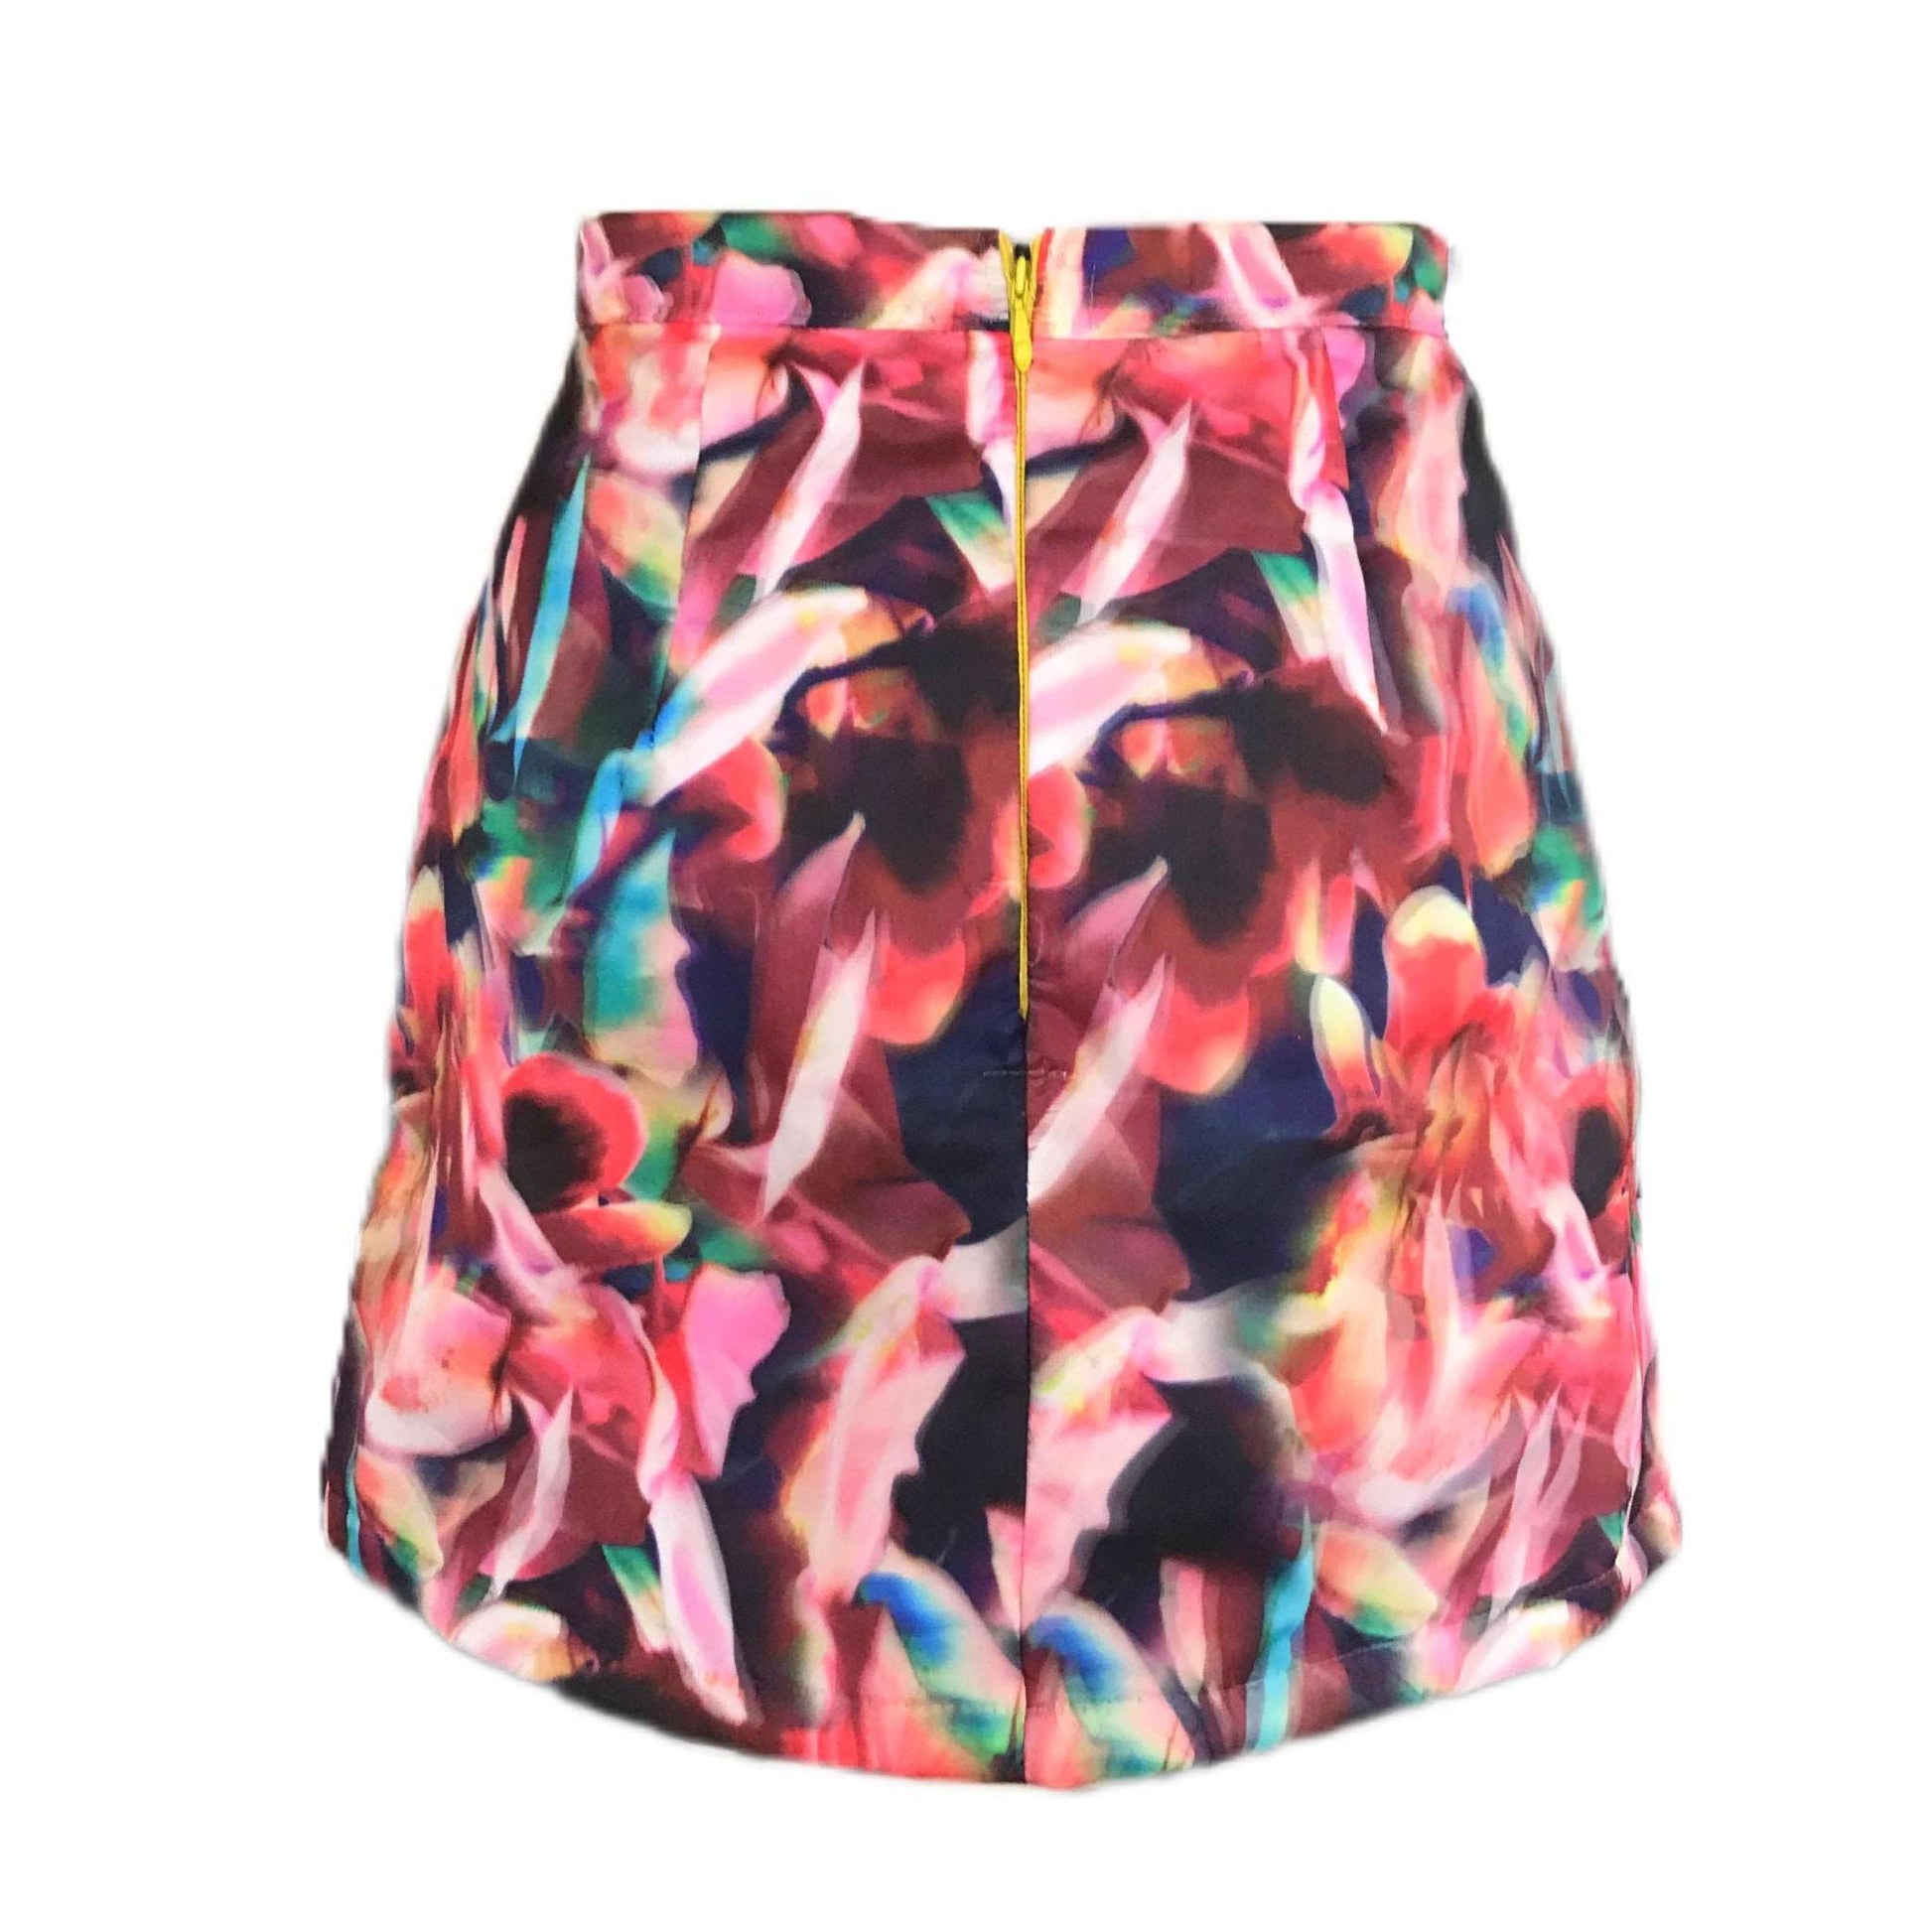 Women's Holographic Mini Skirt- Size 8